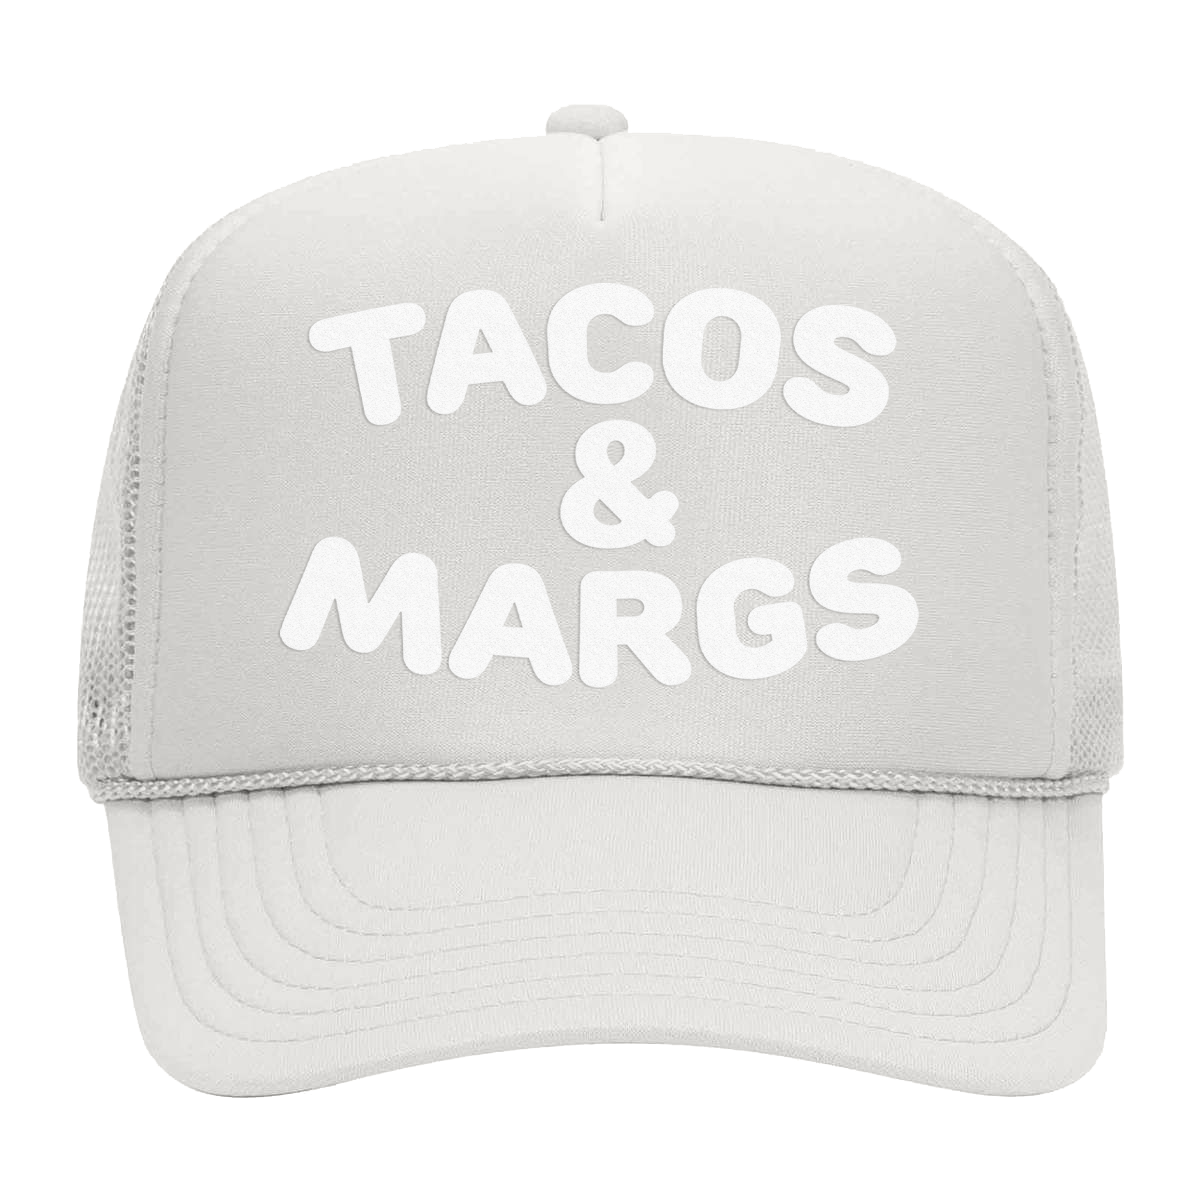 Tacos & Margs Foam Snapback